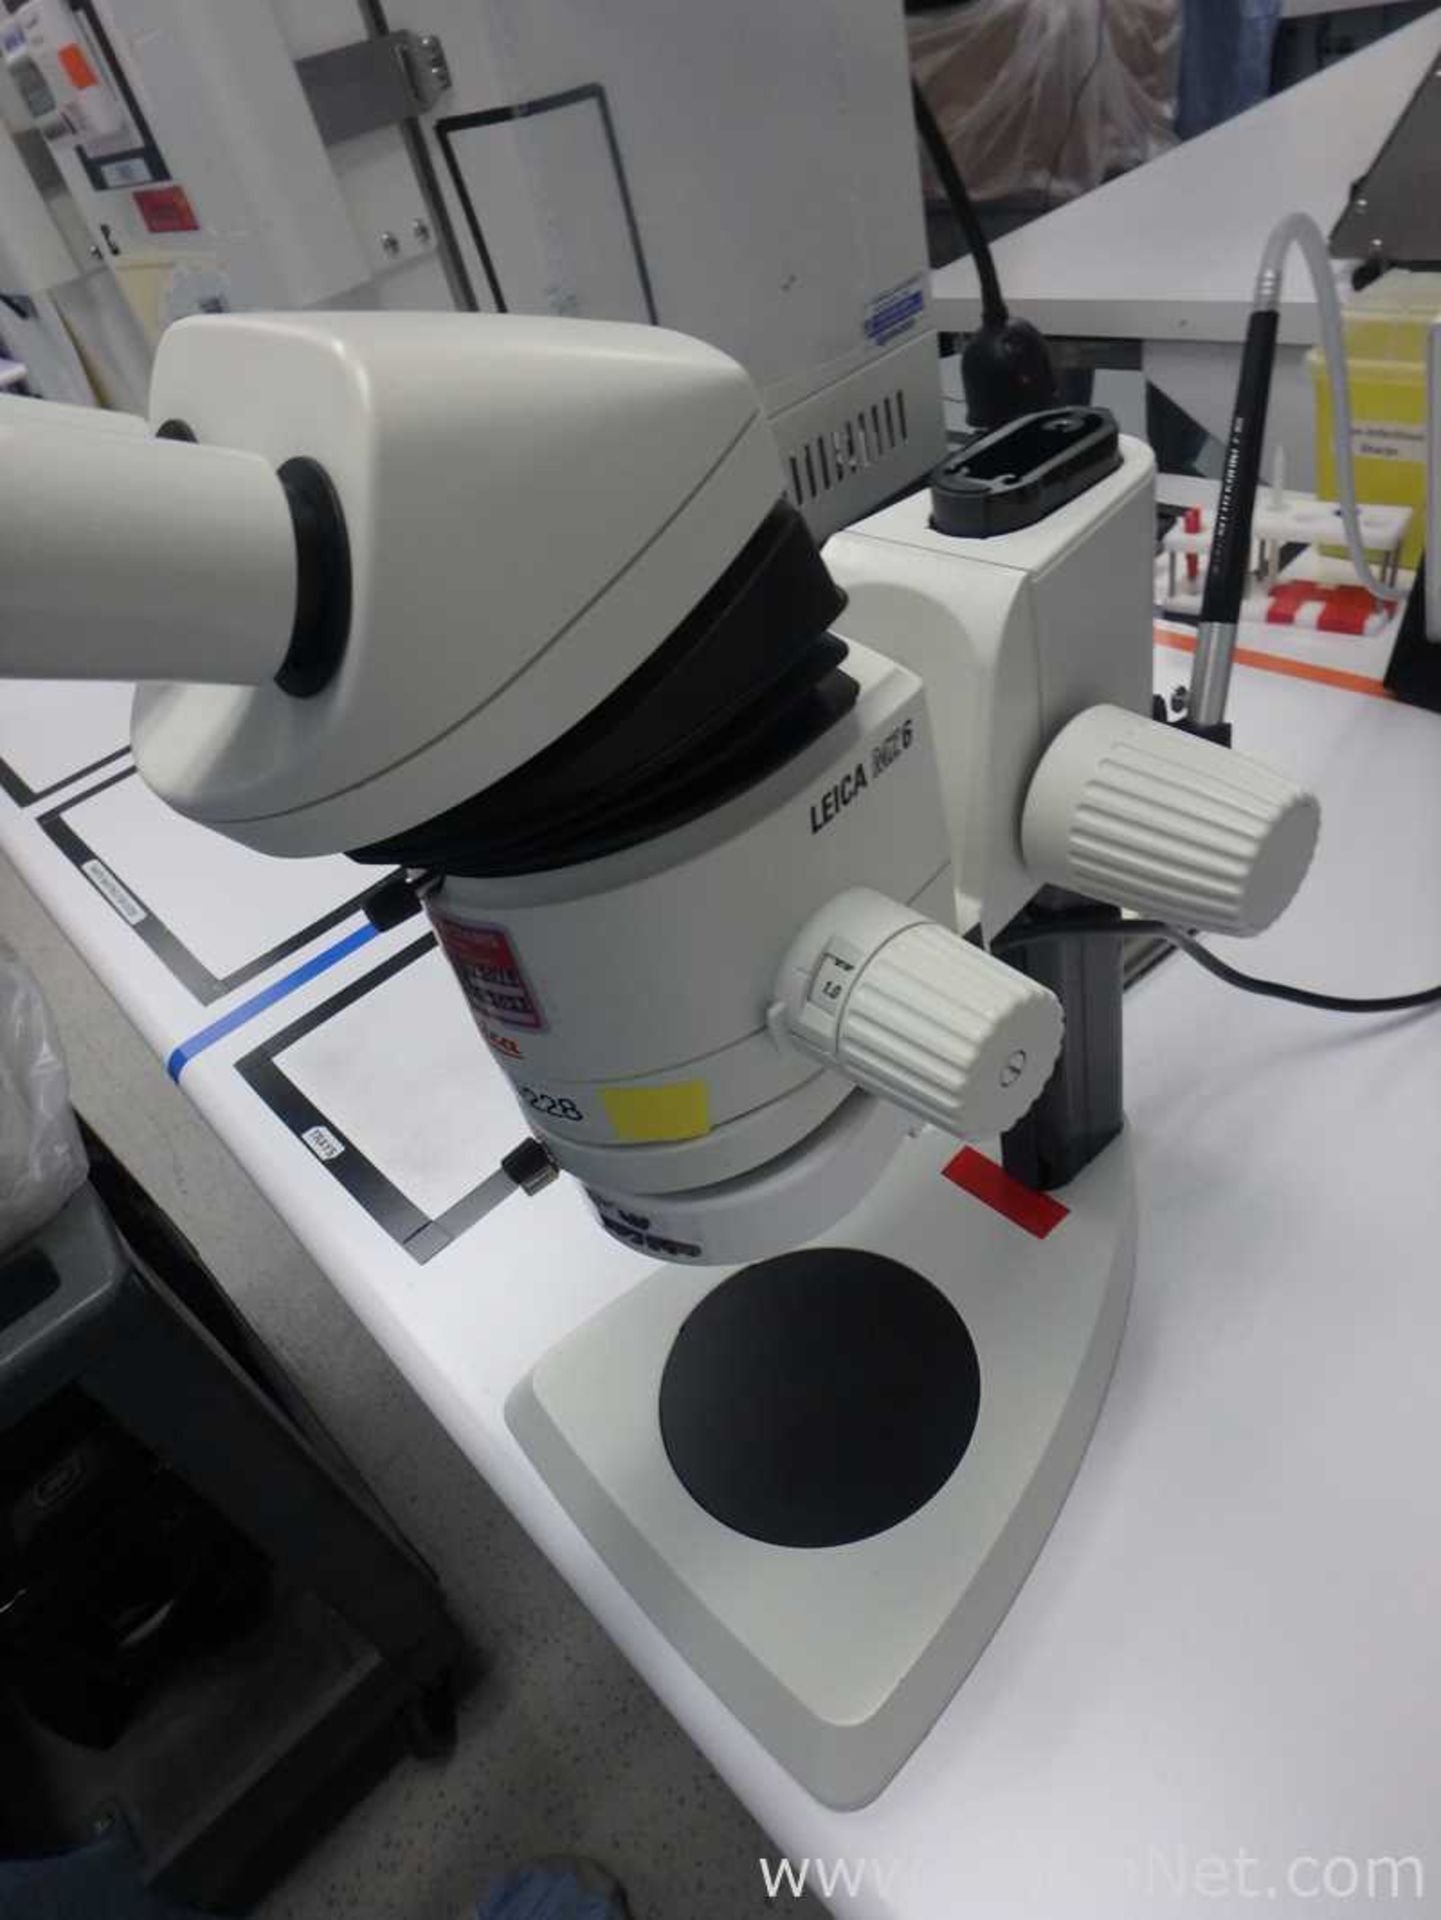 Leica MZ6 Microscope - Image 3 of 4